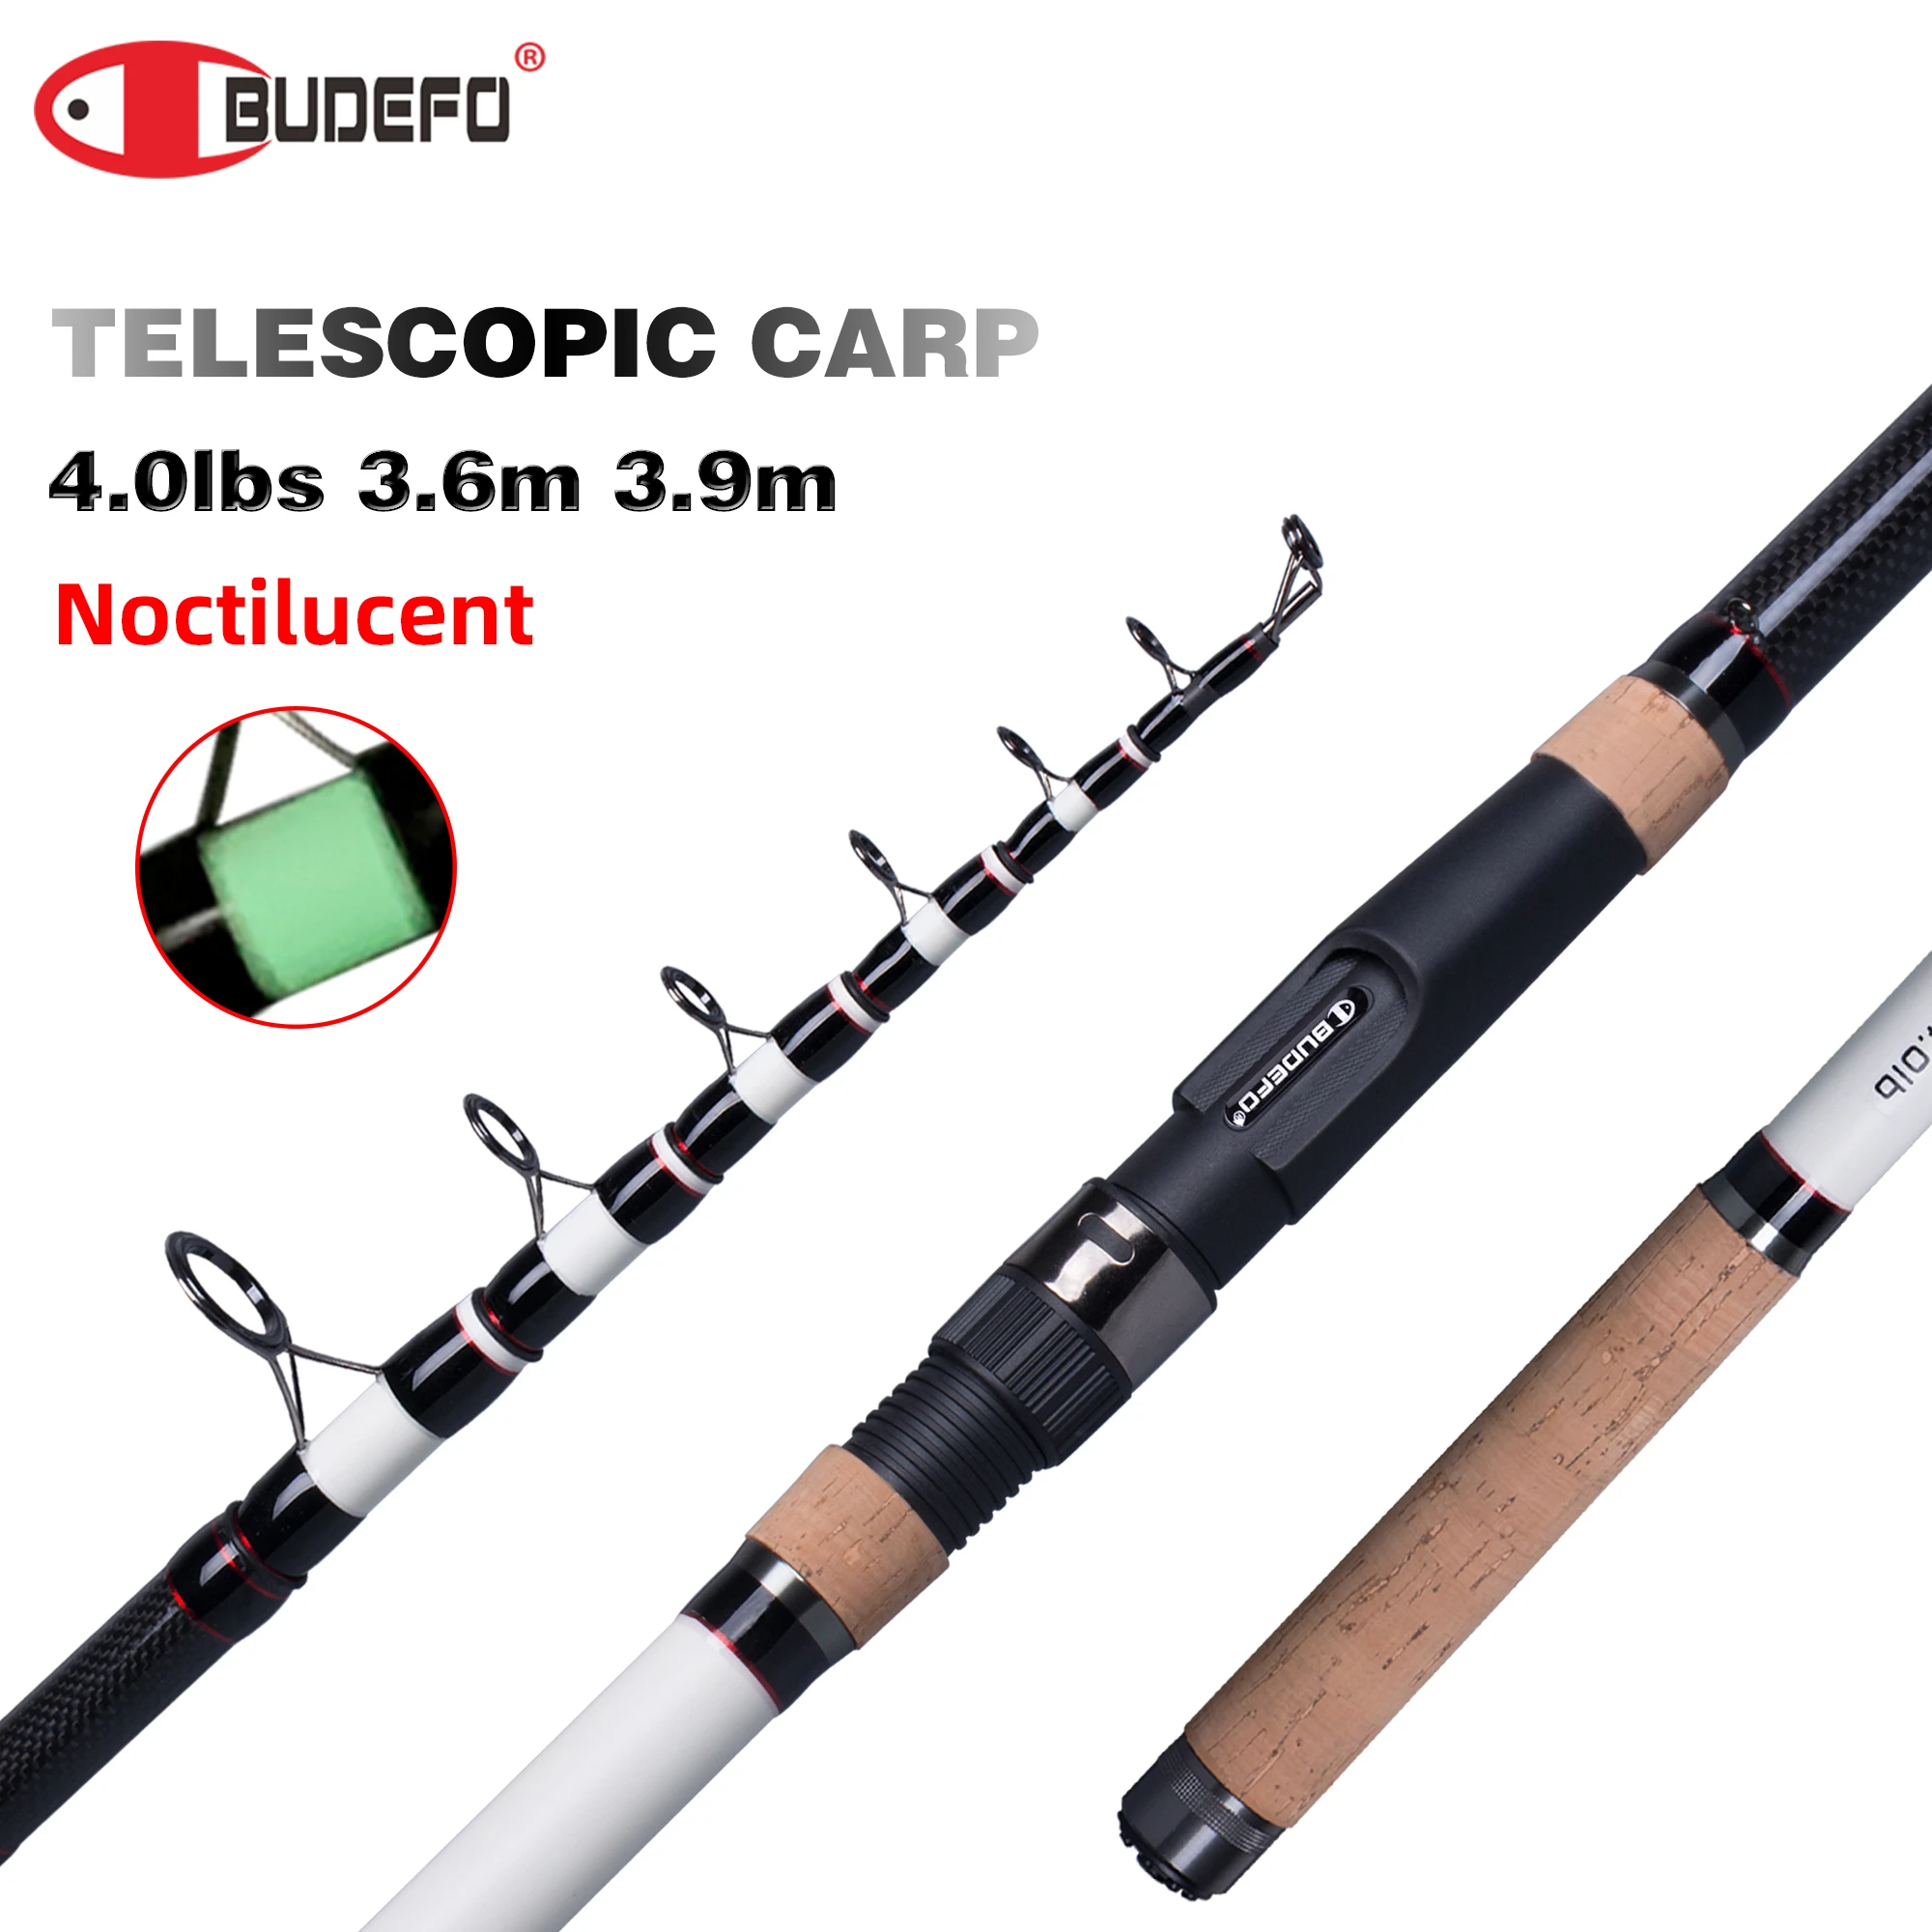 MIFINE Telescopic Carp Fishing Rod 3/3.3/3.6/3.9m T800 Carbon Fiber Tele Spinning Rods 4.0lb Power 60-200g Noctilucent Hard Pole